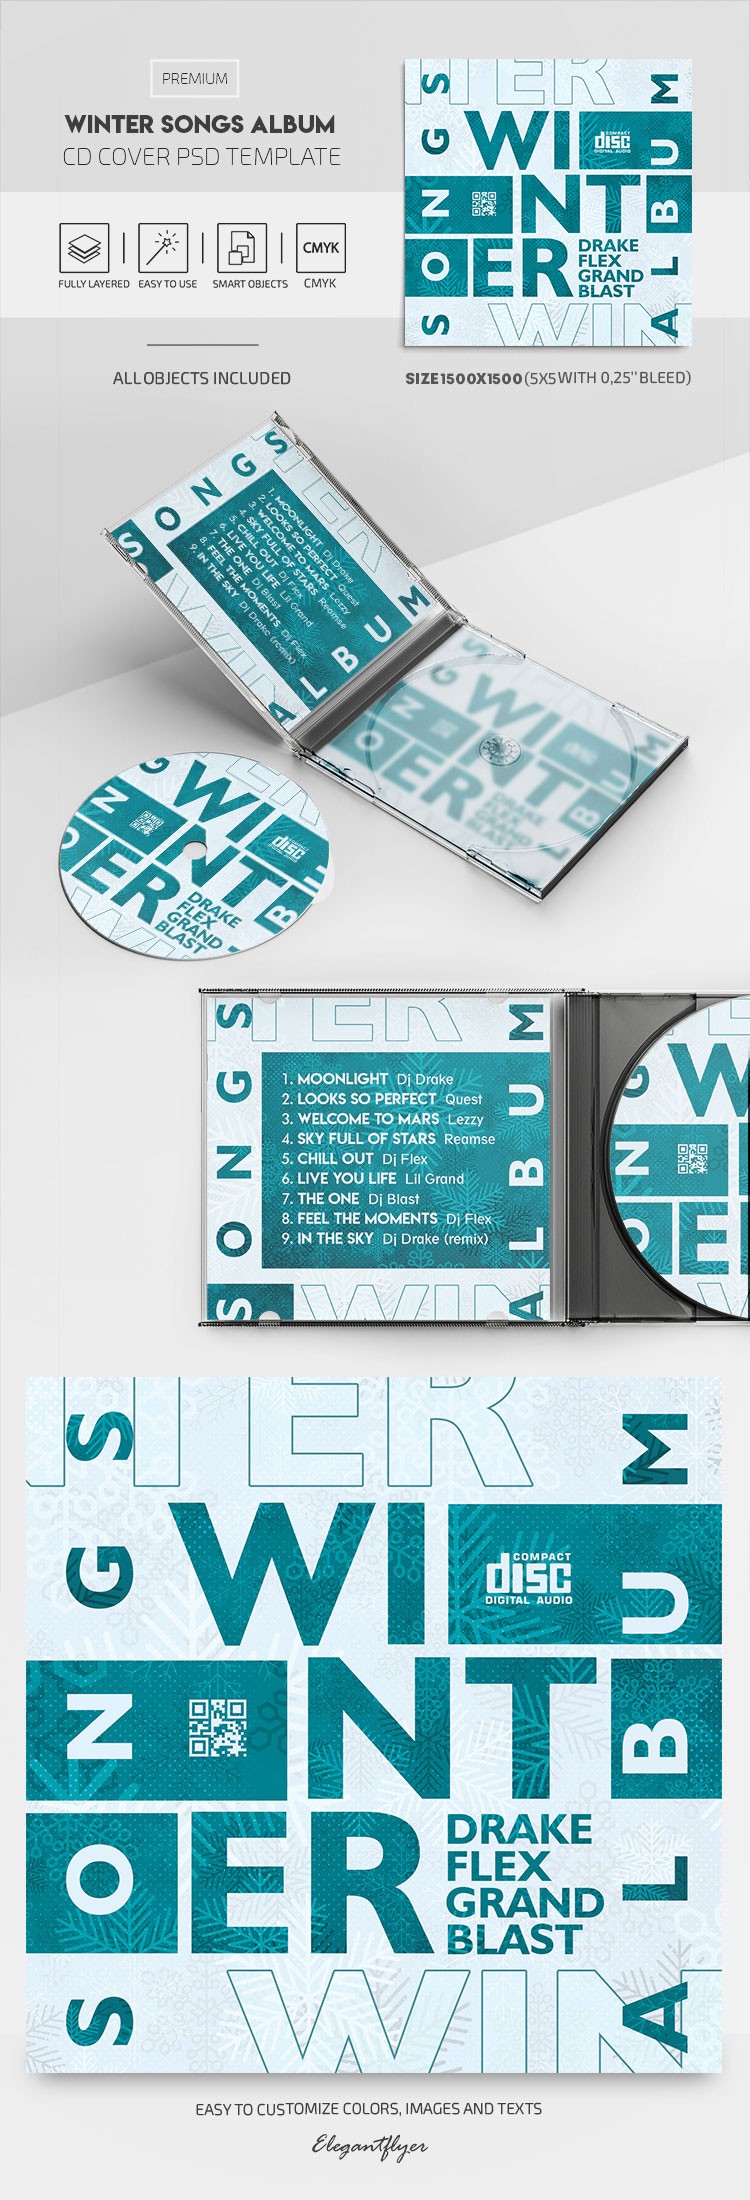 Winterlieder Album CD Cover by ElegantFlyer